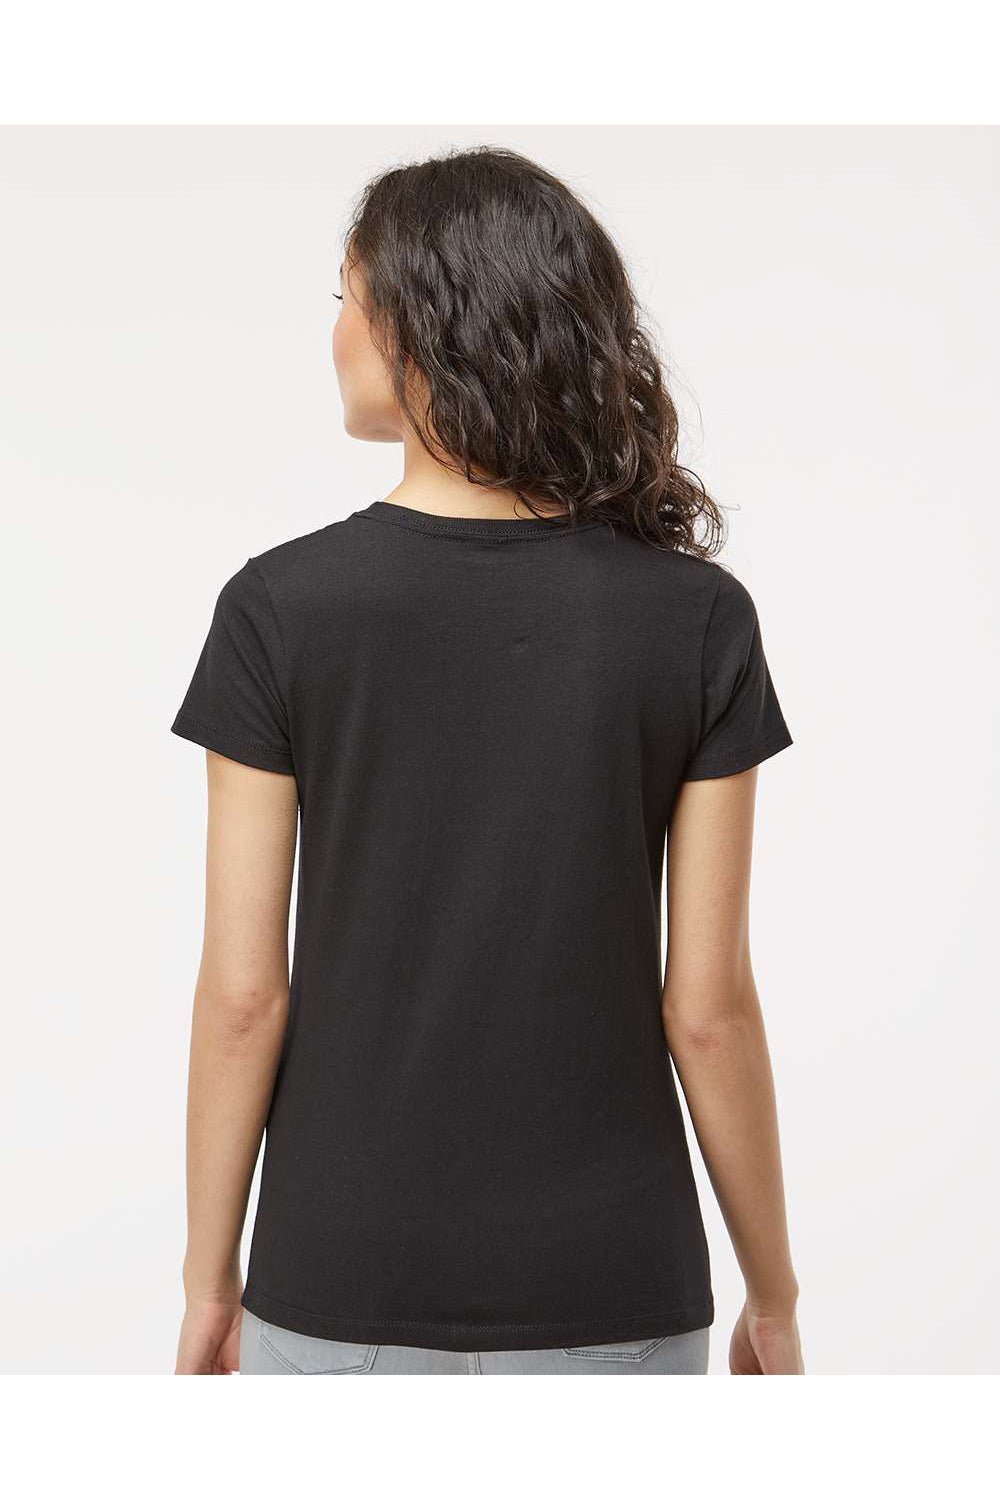 M&O 4810 Womens Gold Soft Touch Short Sleeve Crewneck T-Shirt Black Model Back